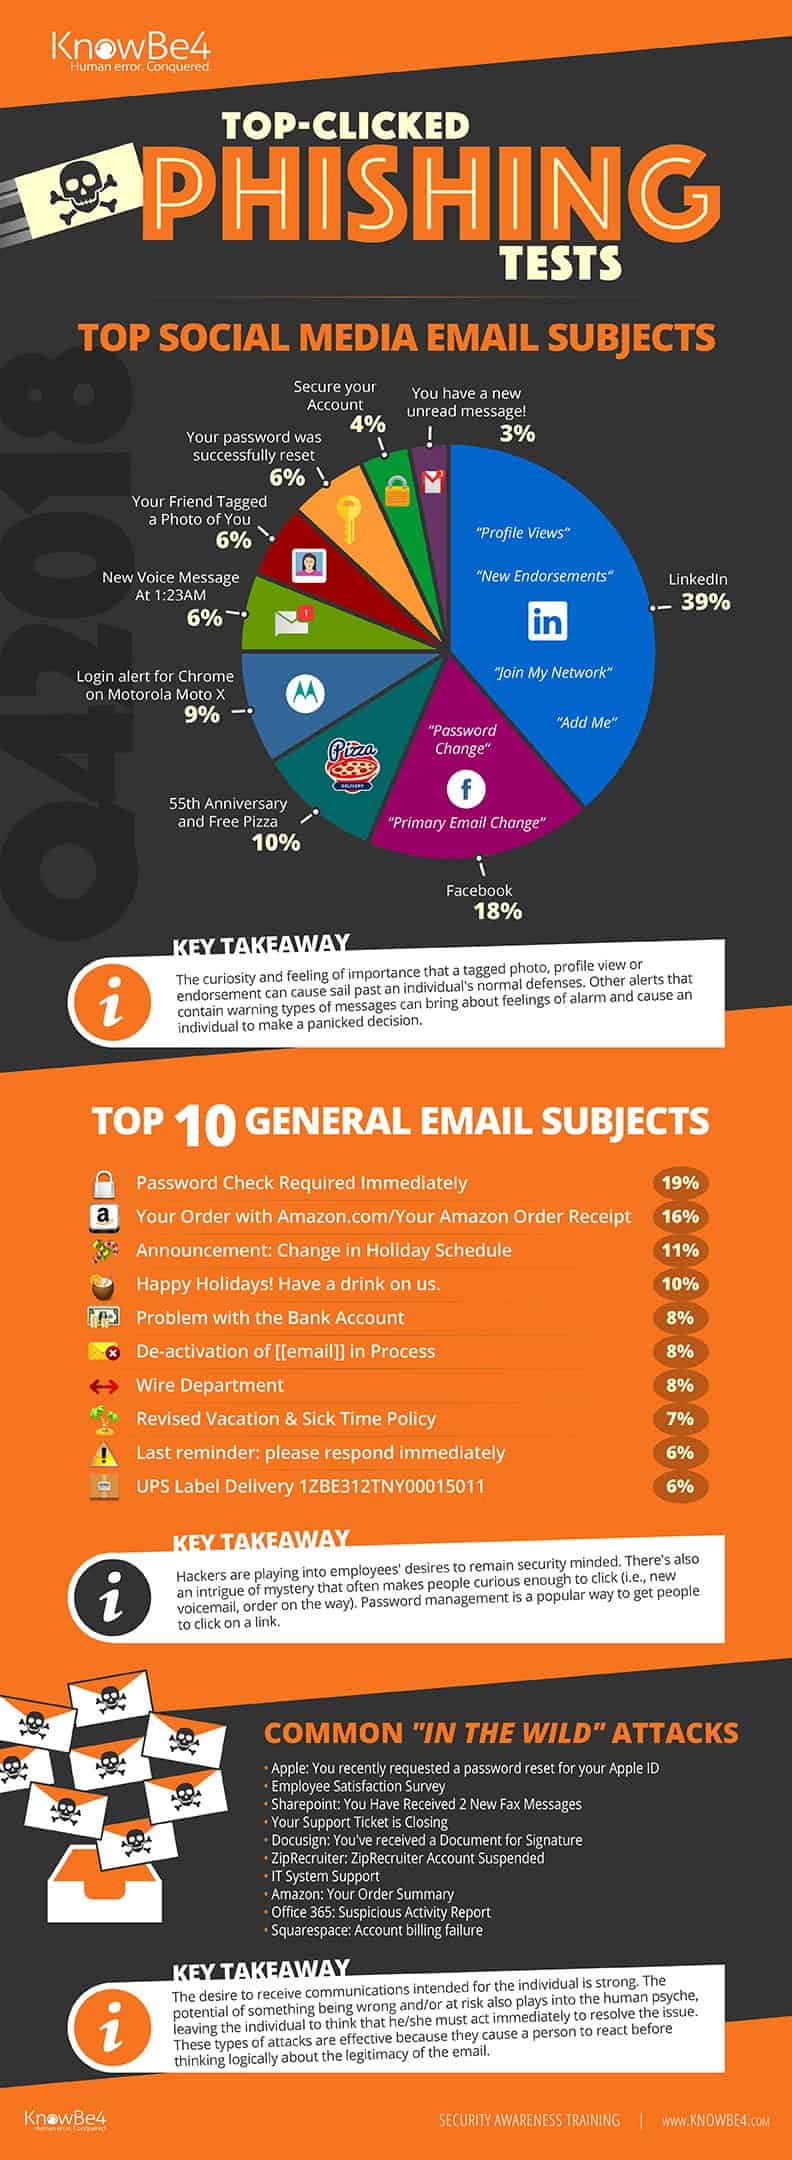 phishing email subjects